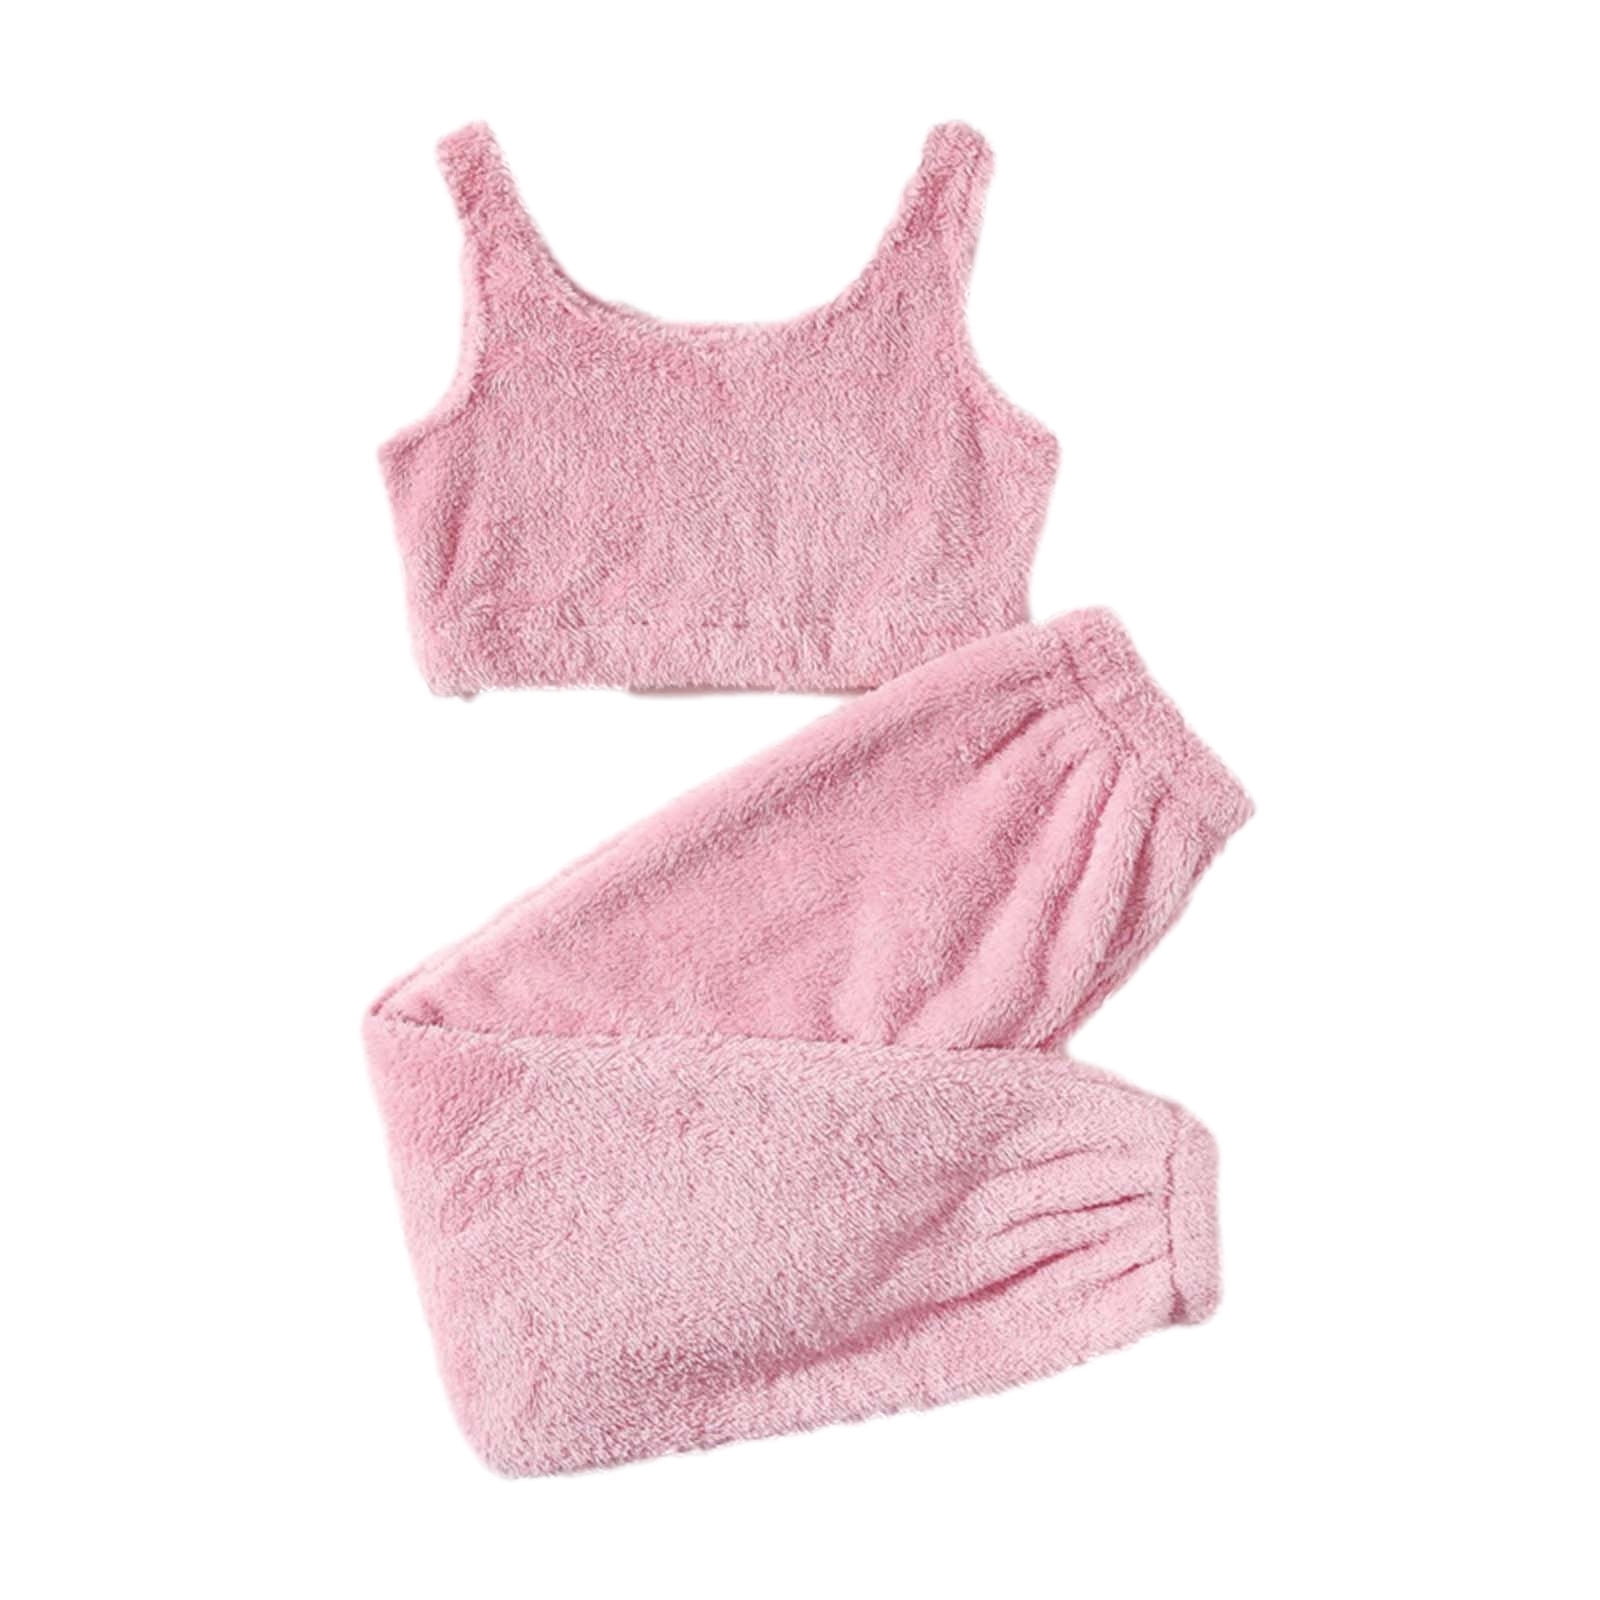 Women's Comfy Sleepwear Tank Top with Runner Shorts, 2-Piece Fuzzy